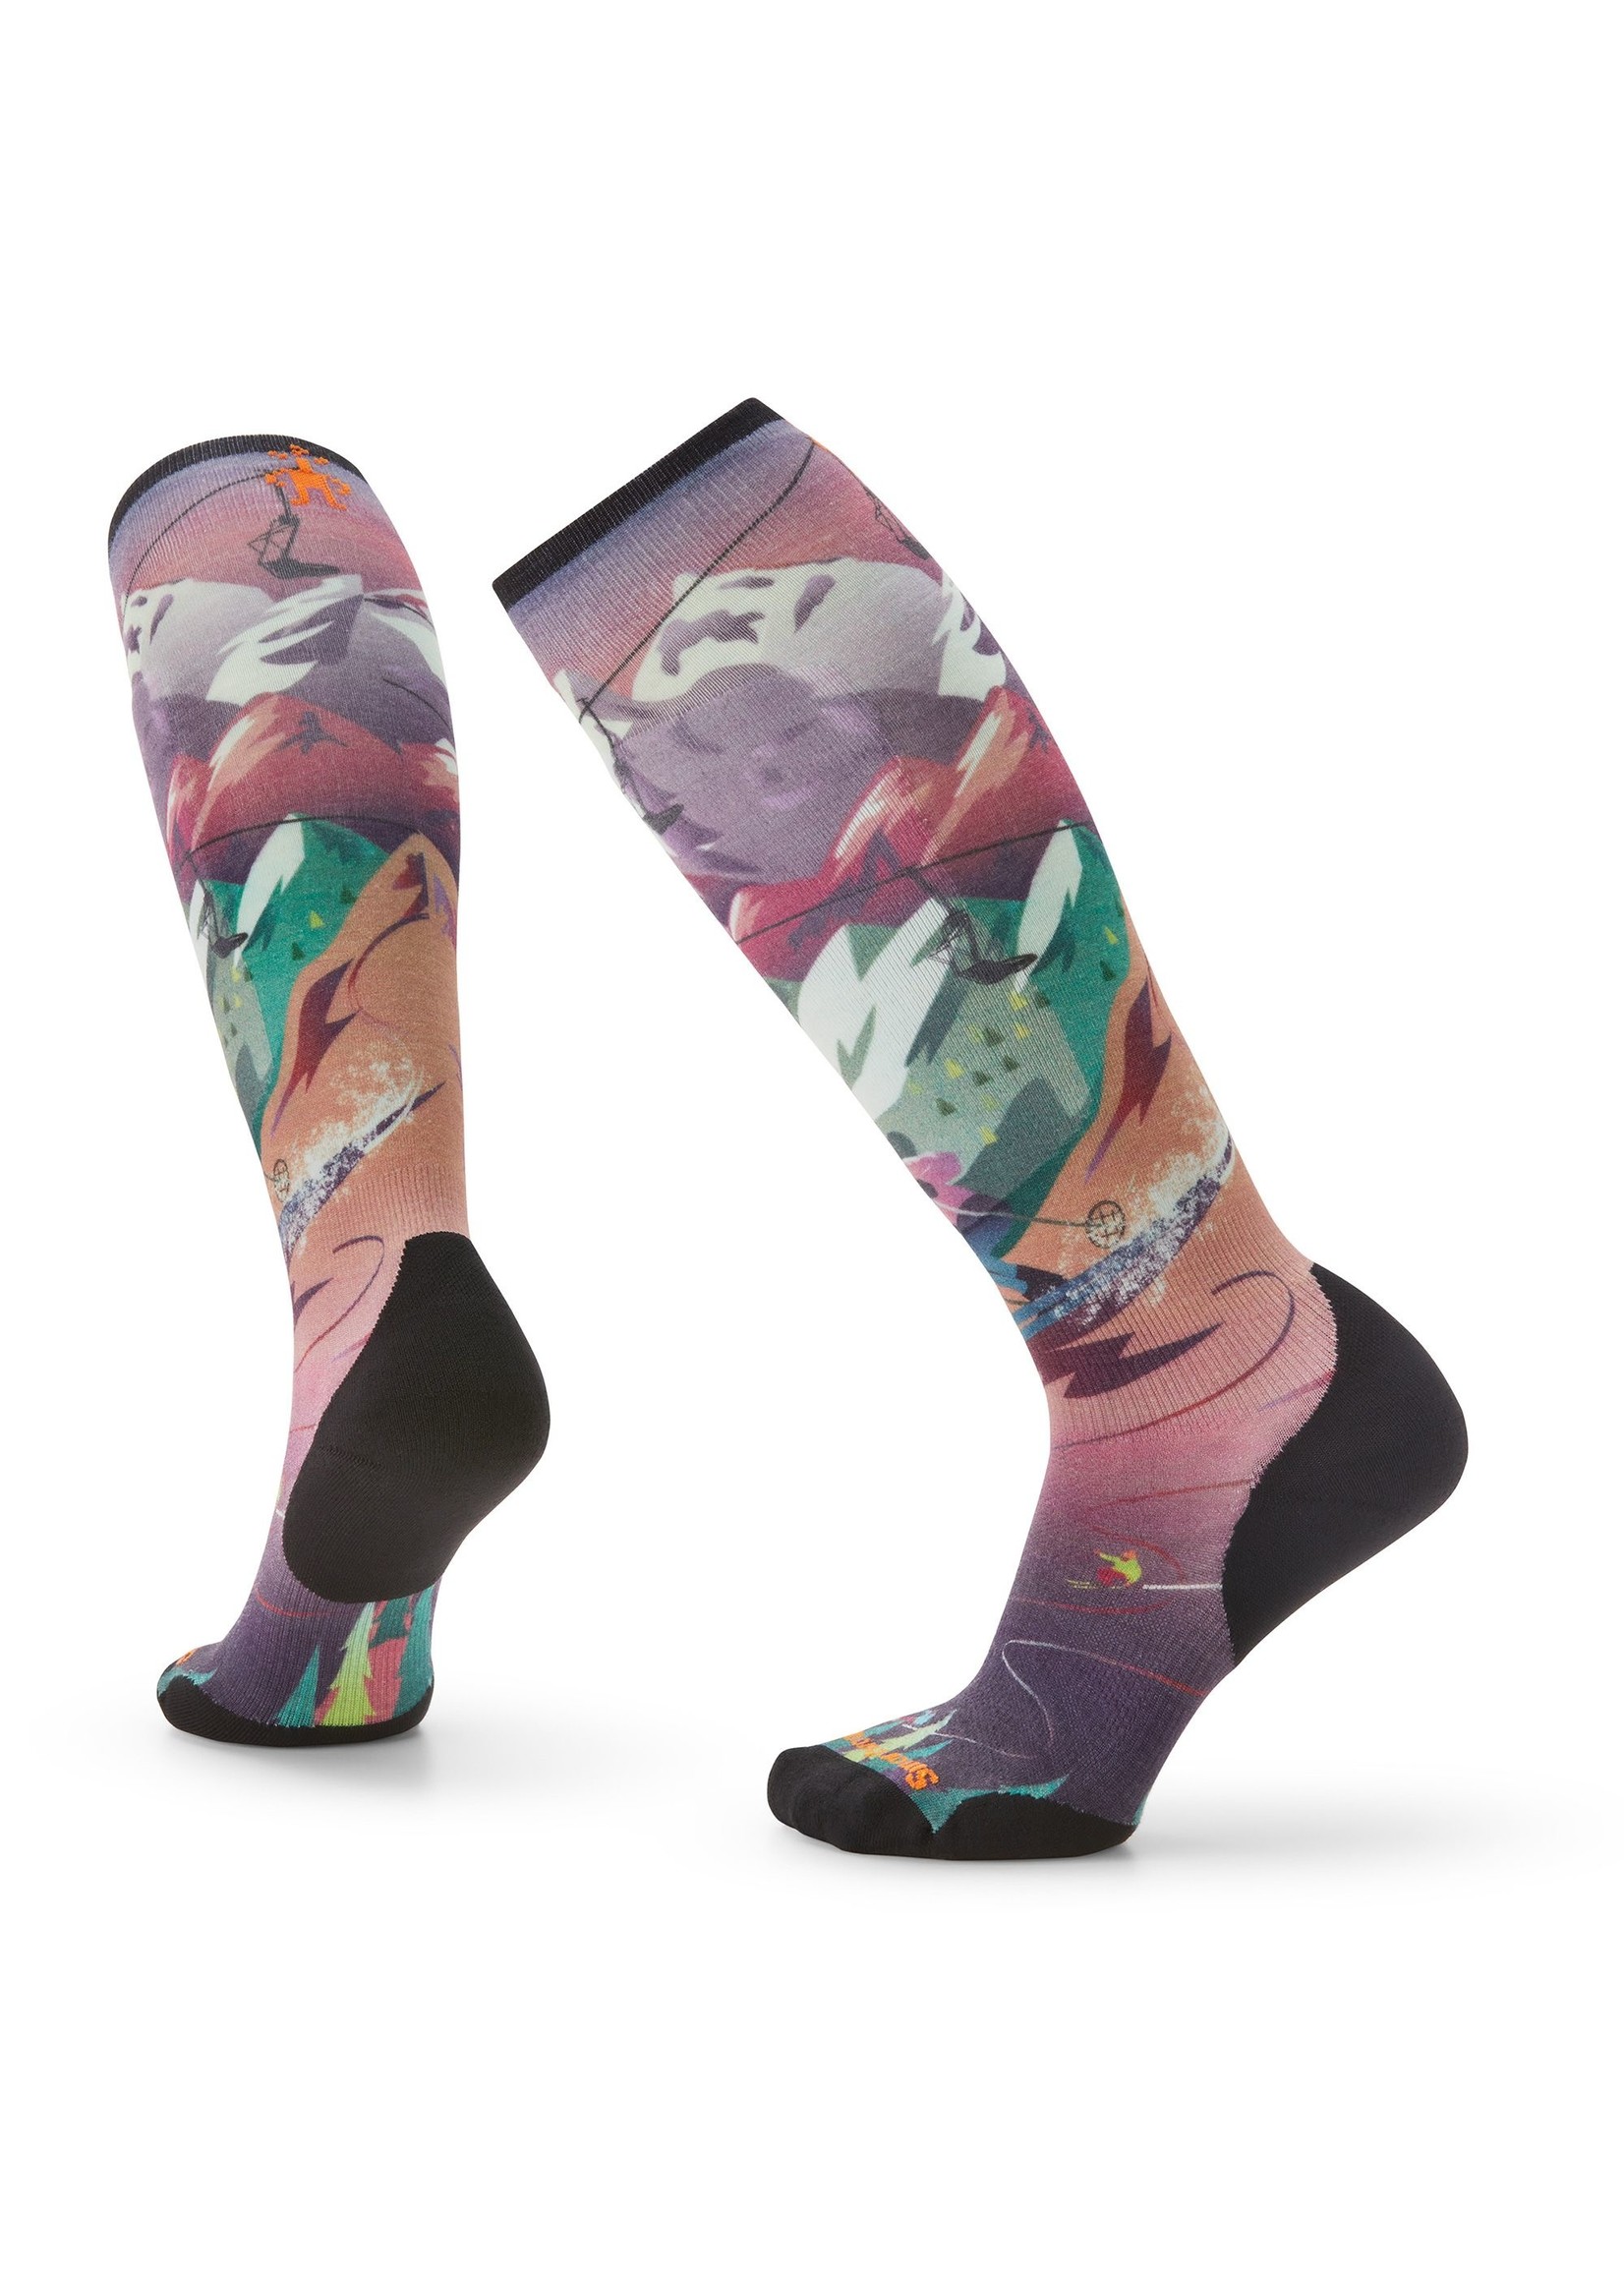 SMARTWOOL Women's Merino ski pants with mountain print